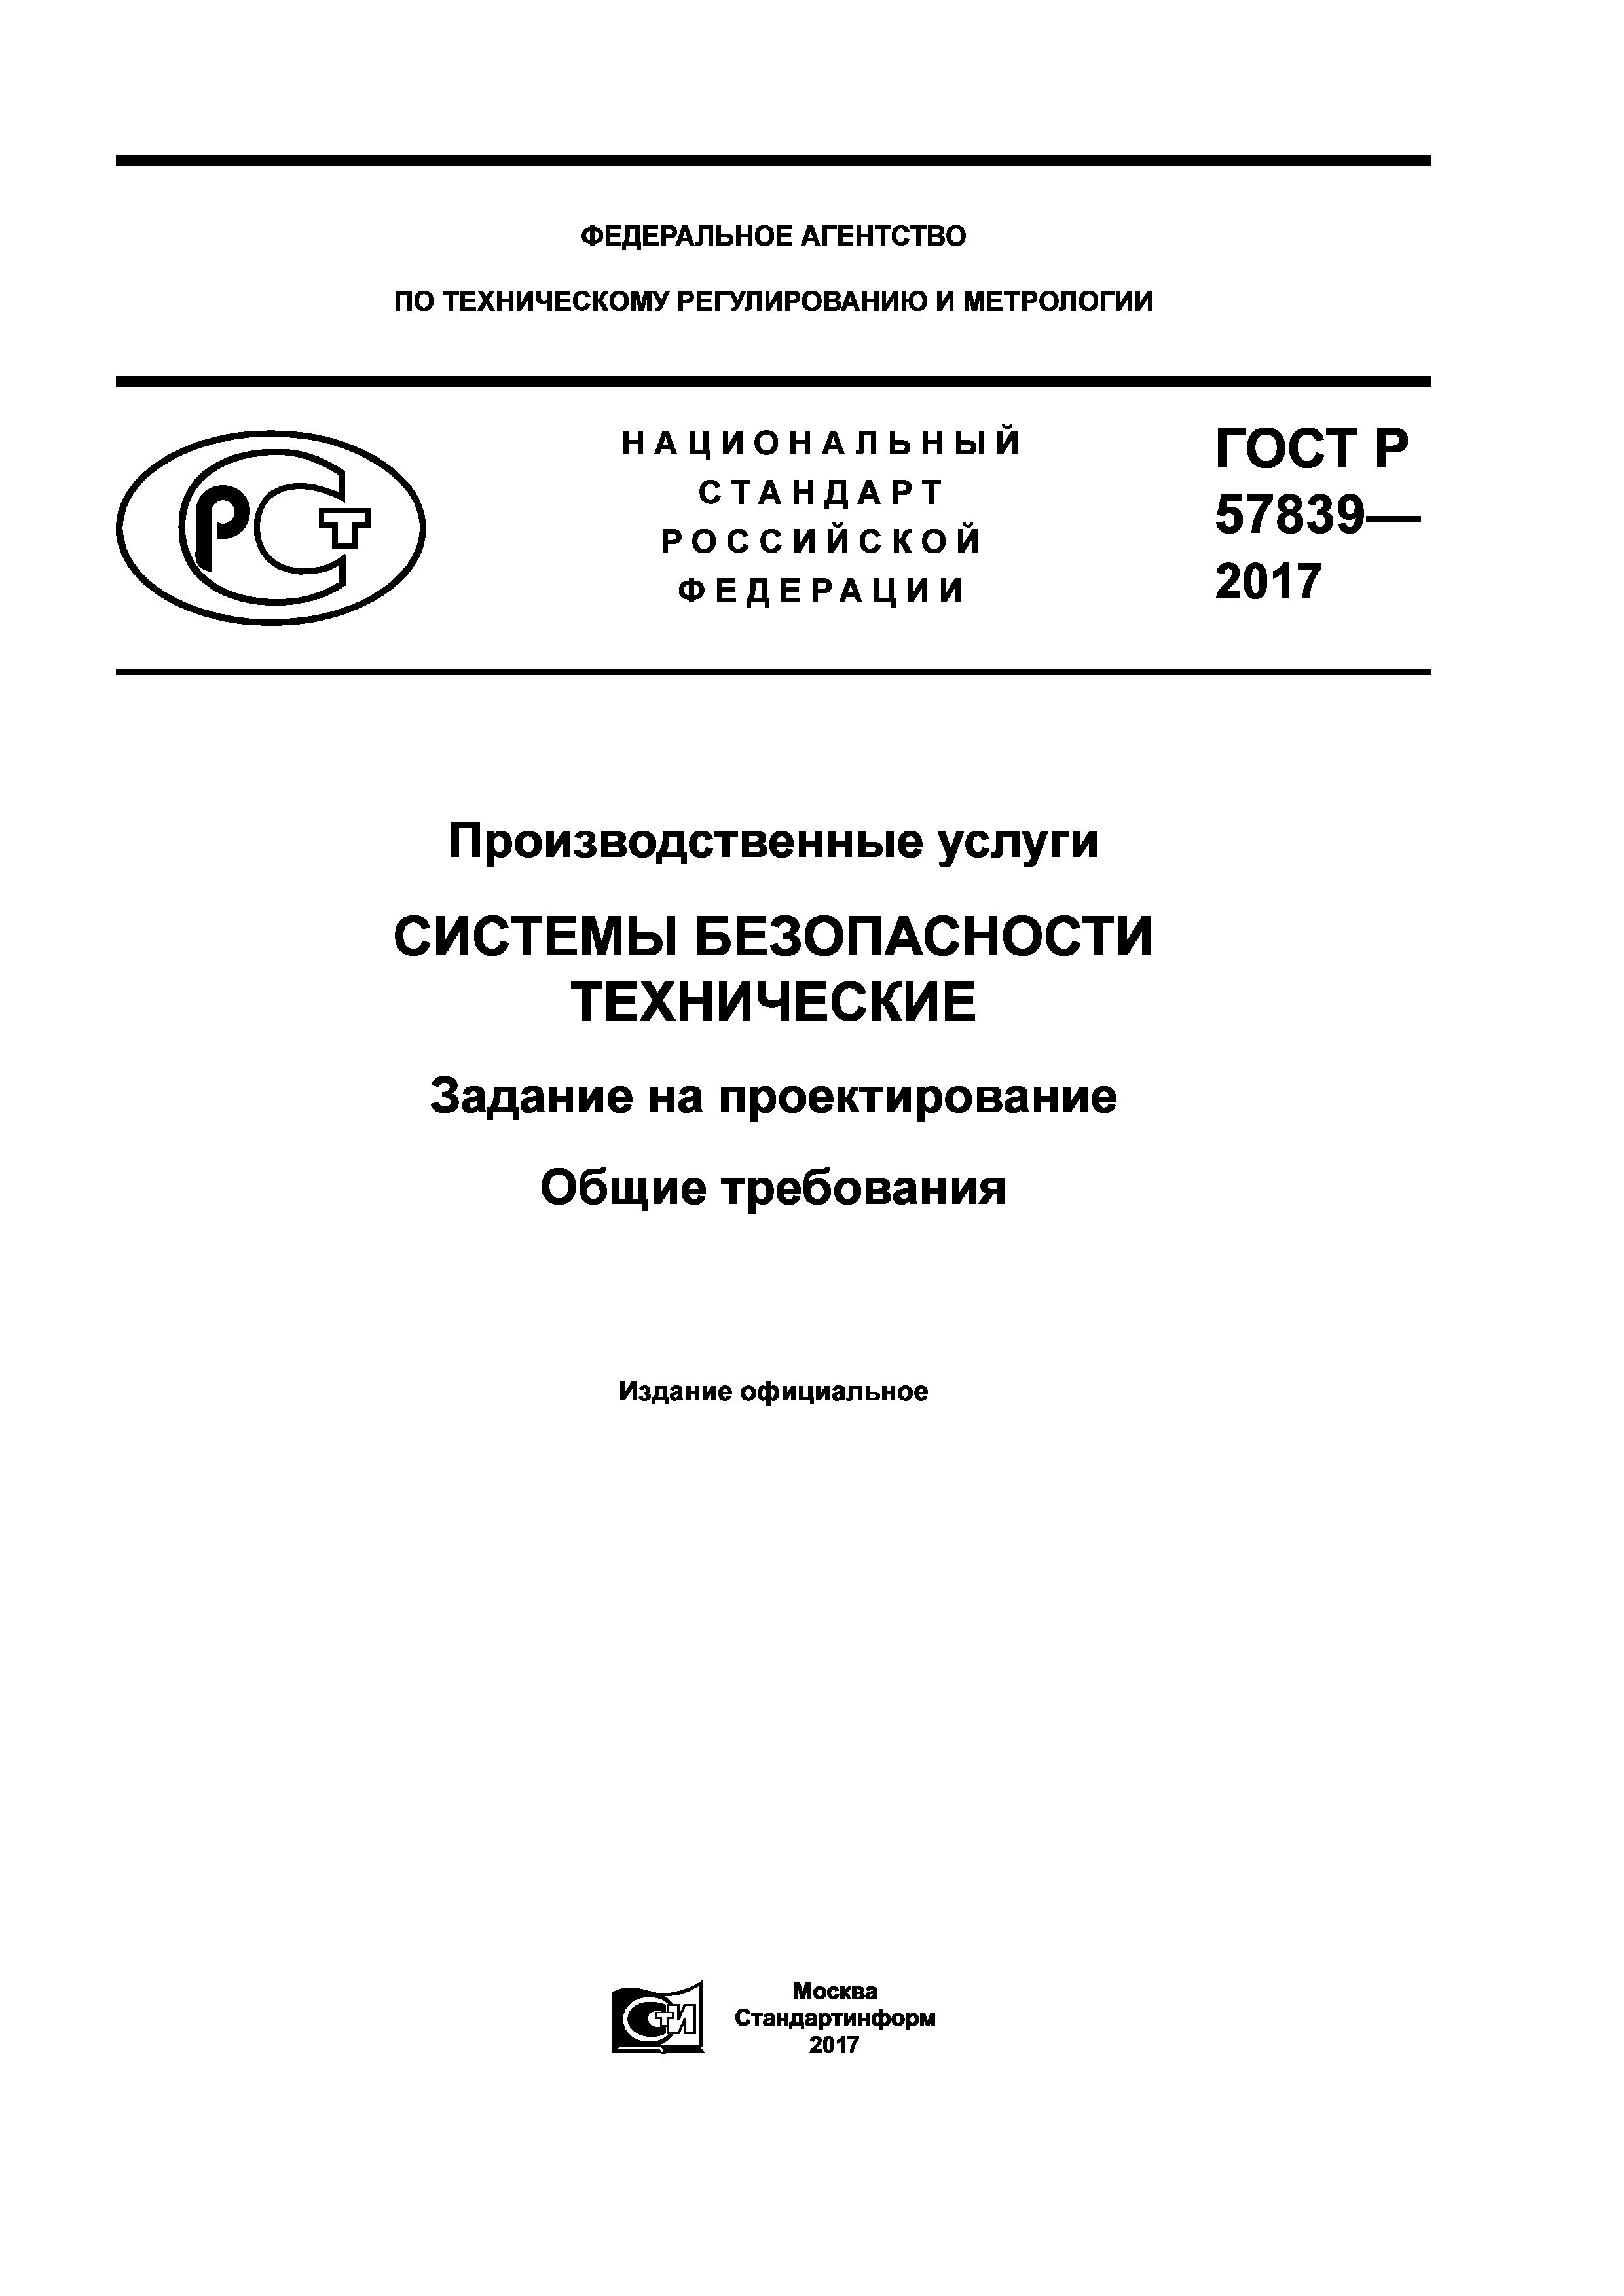 ГОСТ Р 57839-2017